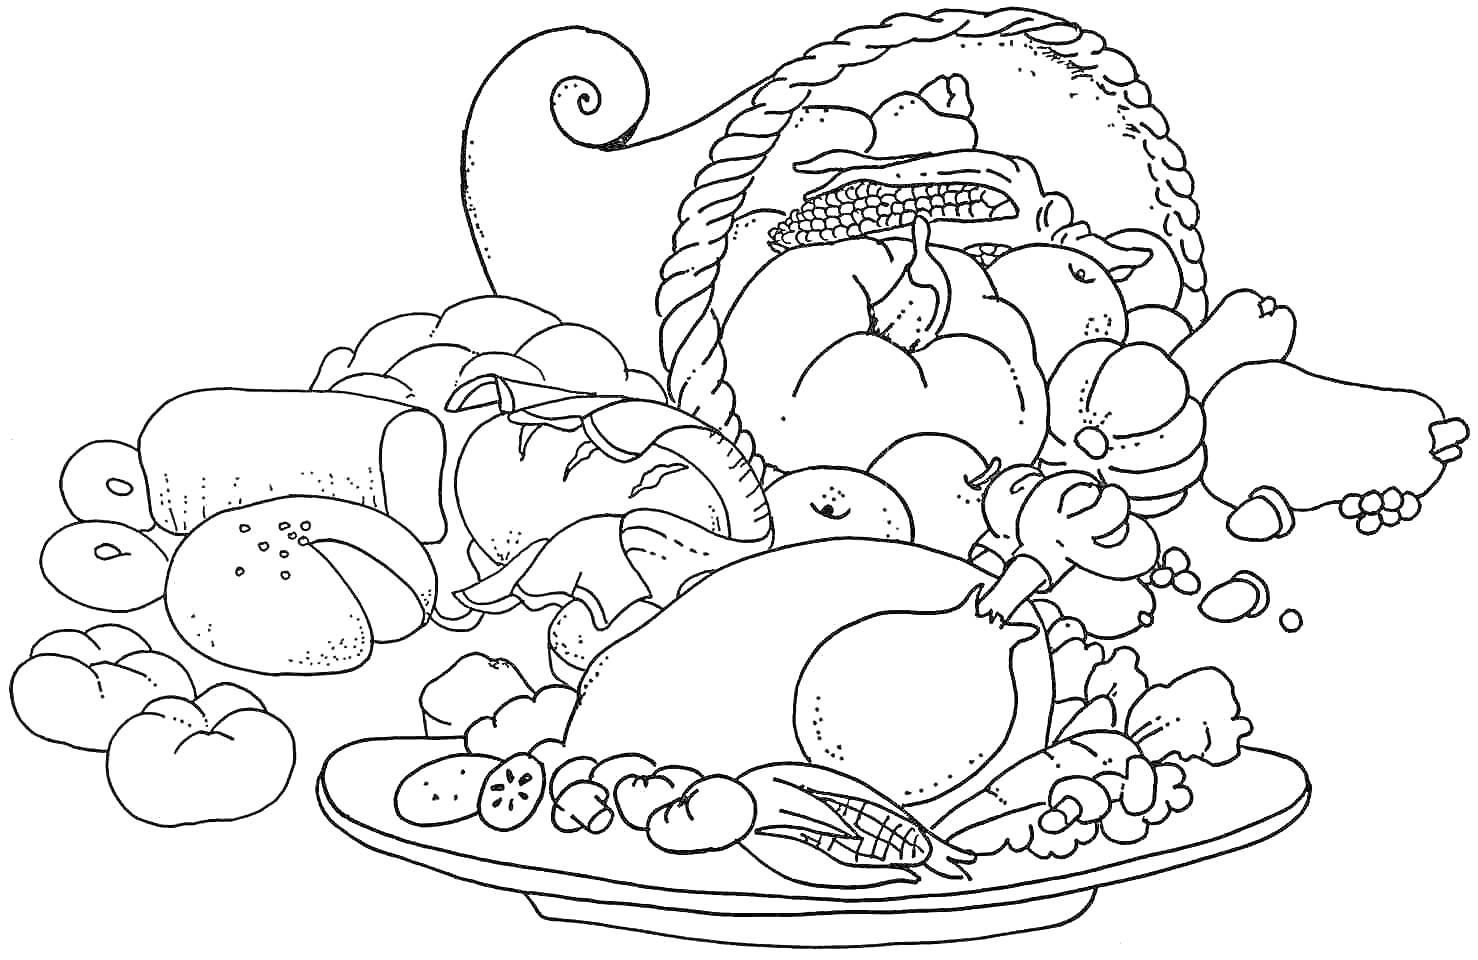 Корзина с хлебом, яблоками и овощами, и индейка с гарниром на тарелке